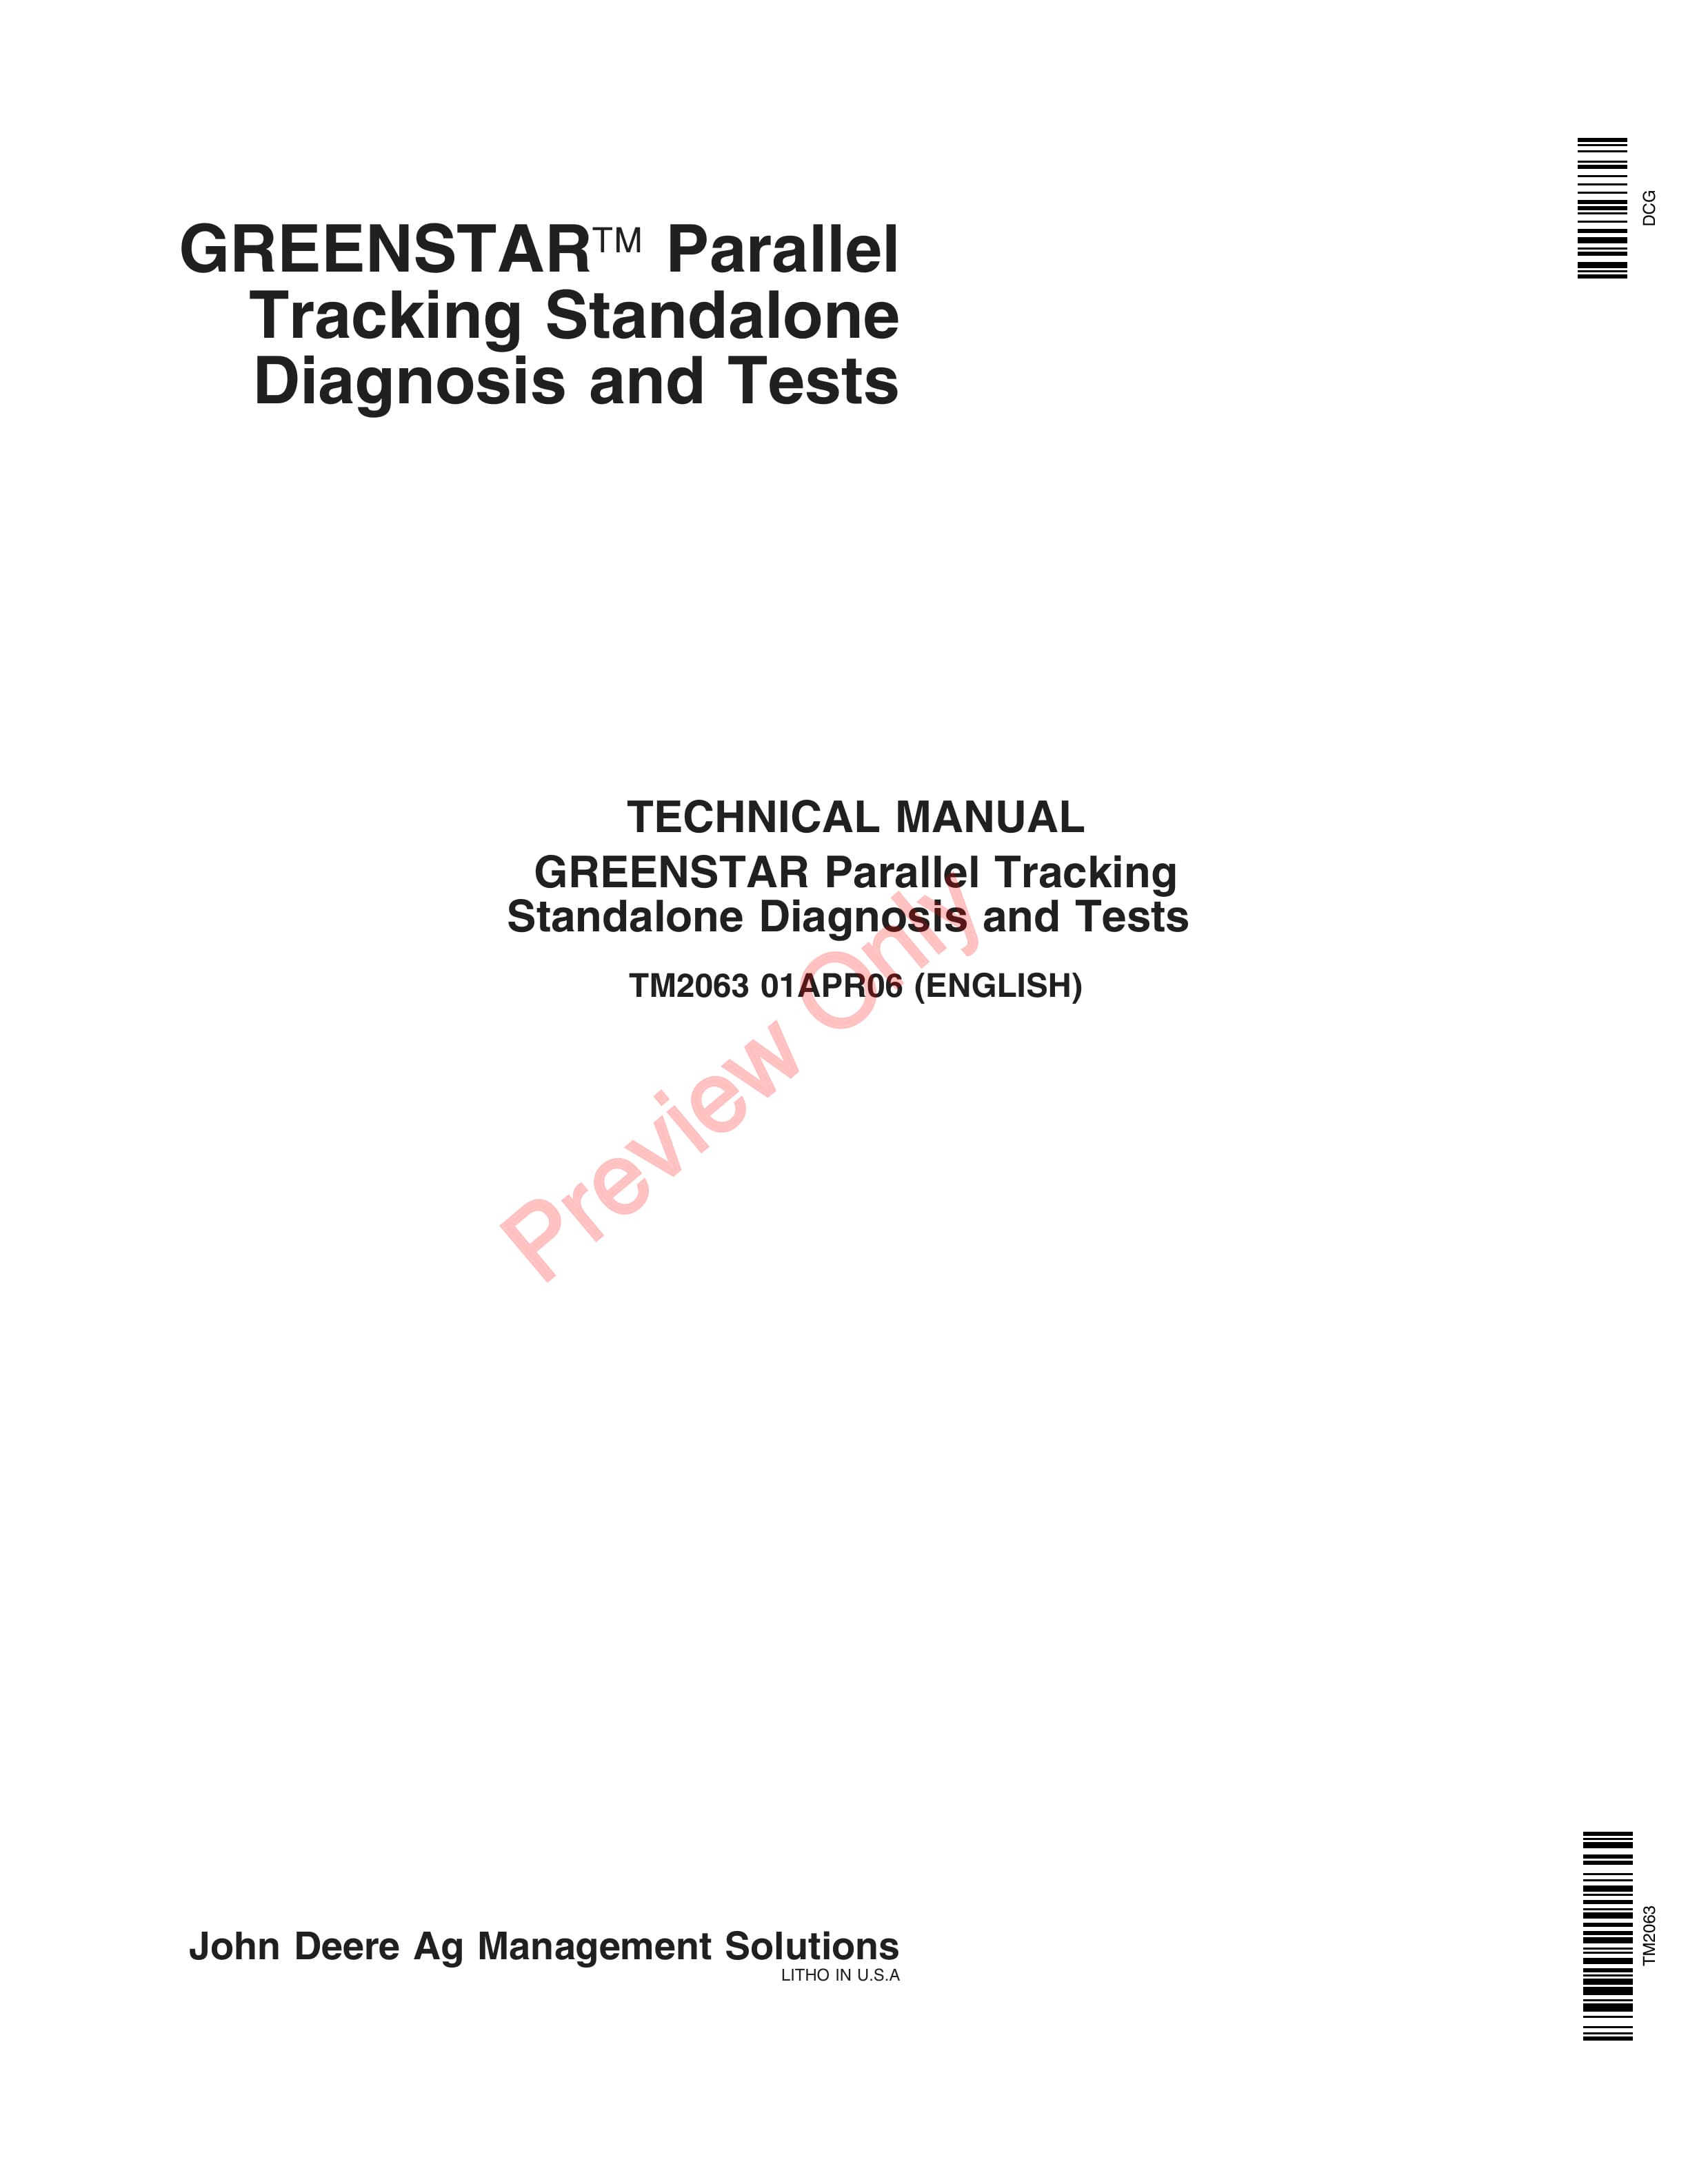 John Deere Greenstar Parallel Tracking StandAlone Technical Manual TM2063 01APR06-1